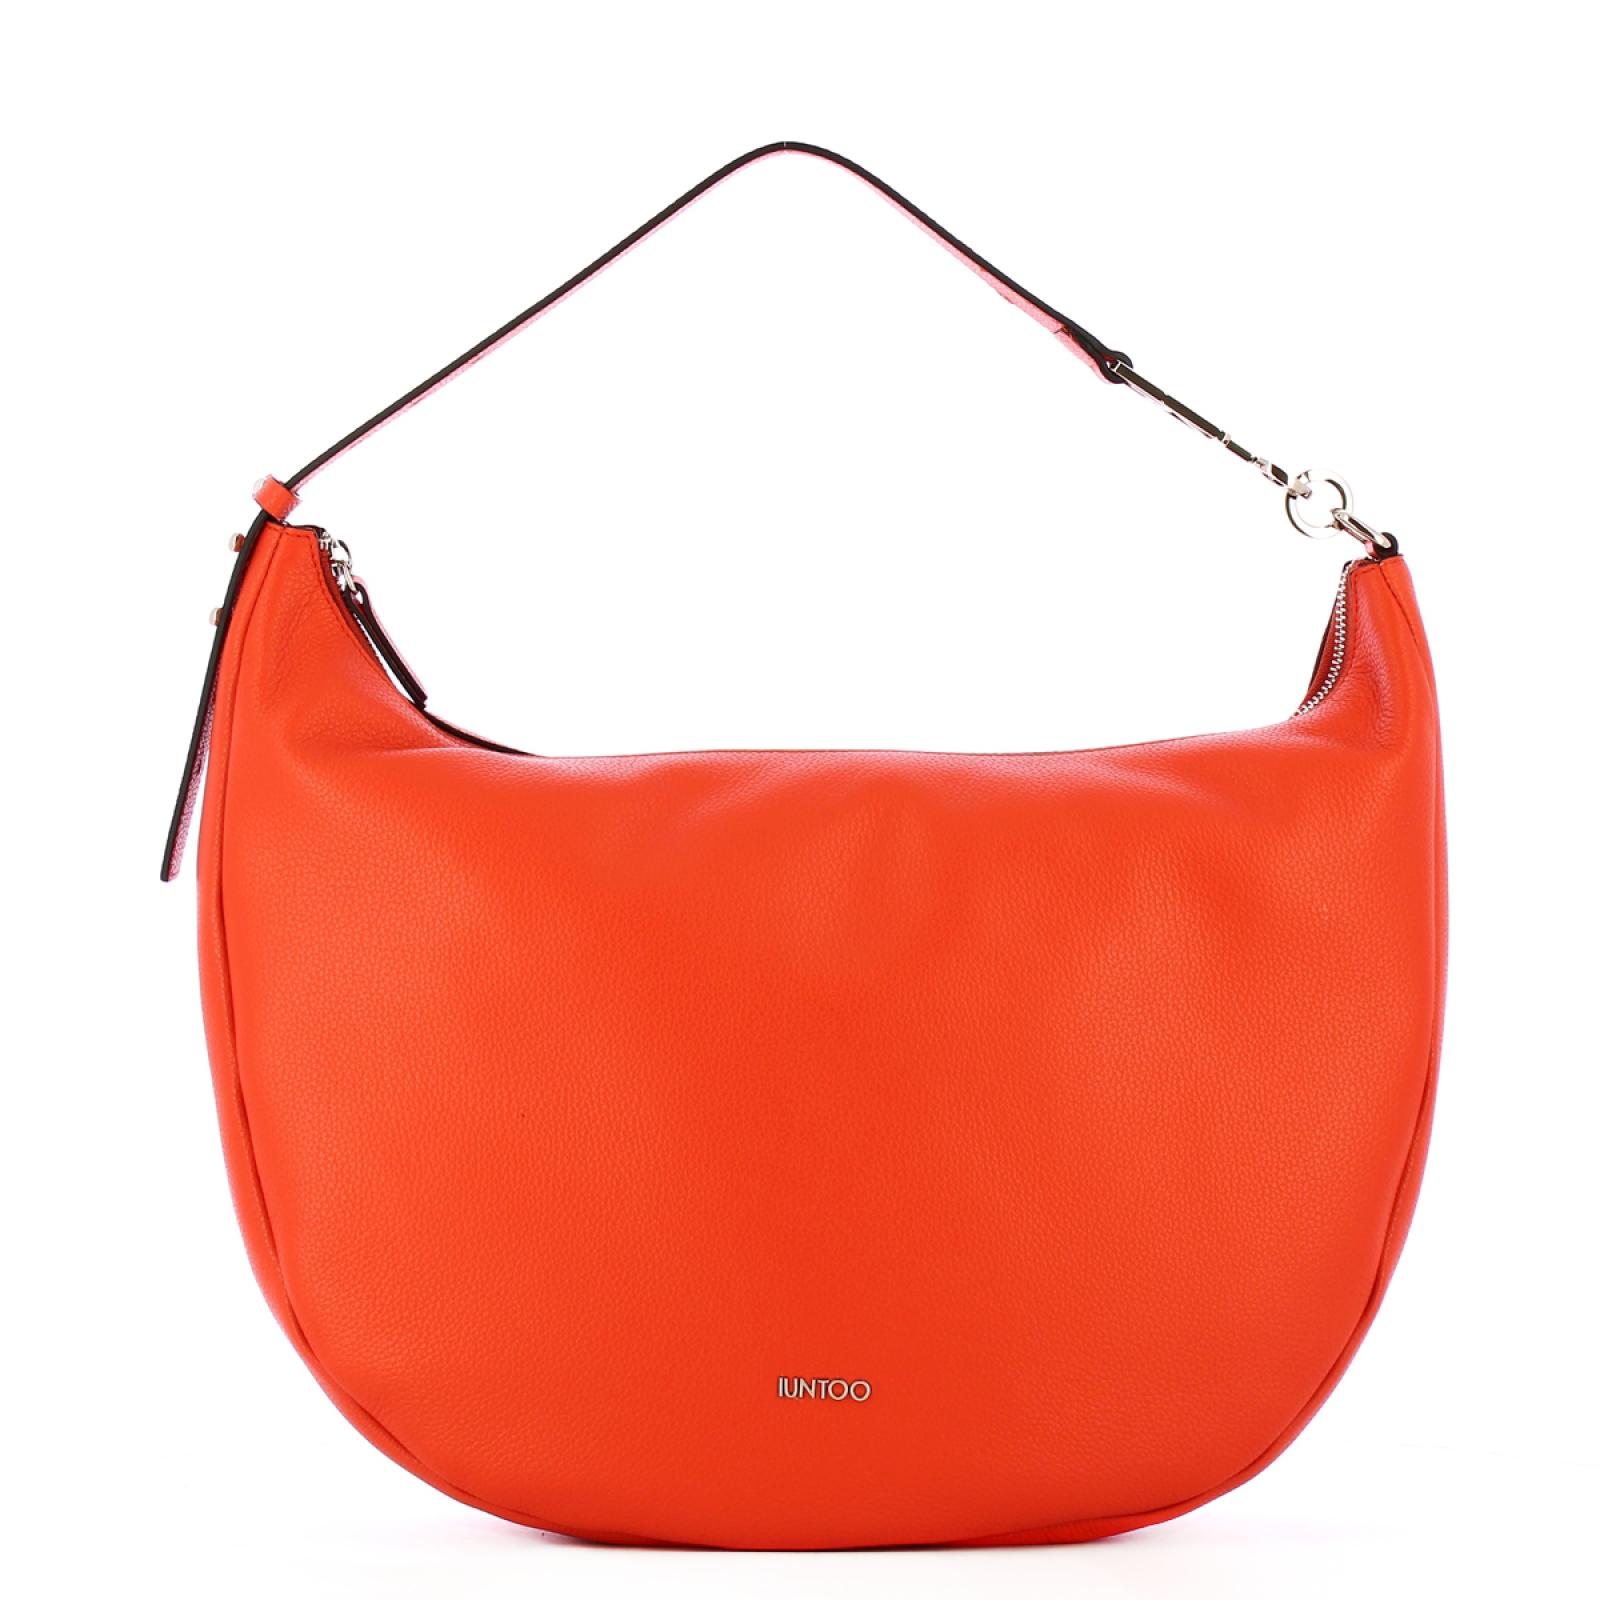 Iuntoo New Hobo Bag Grande in pelle Armonia Tangerine - 1